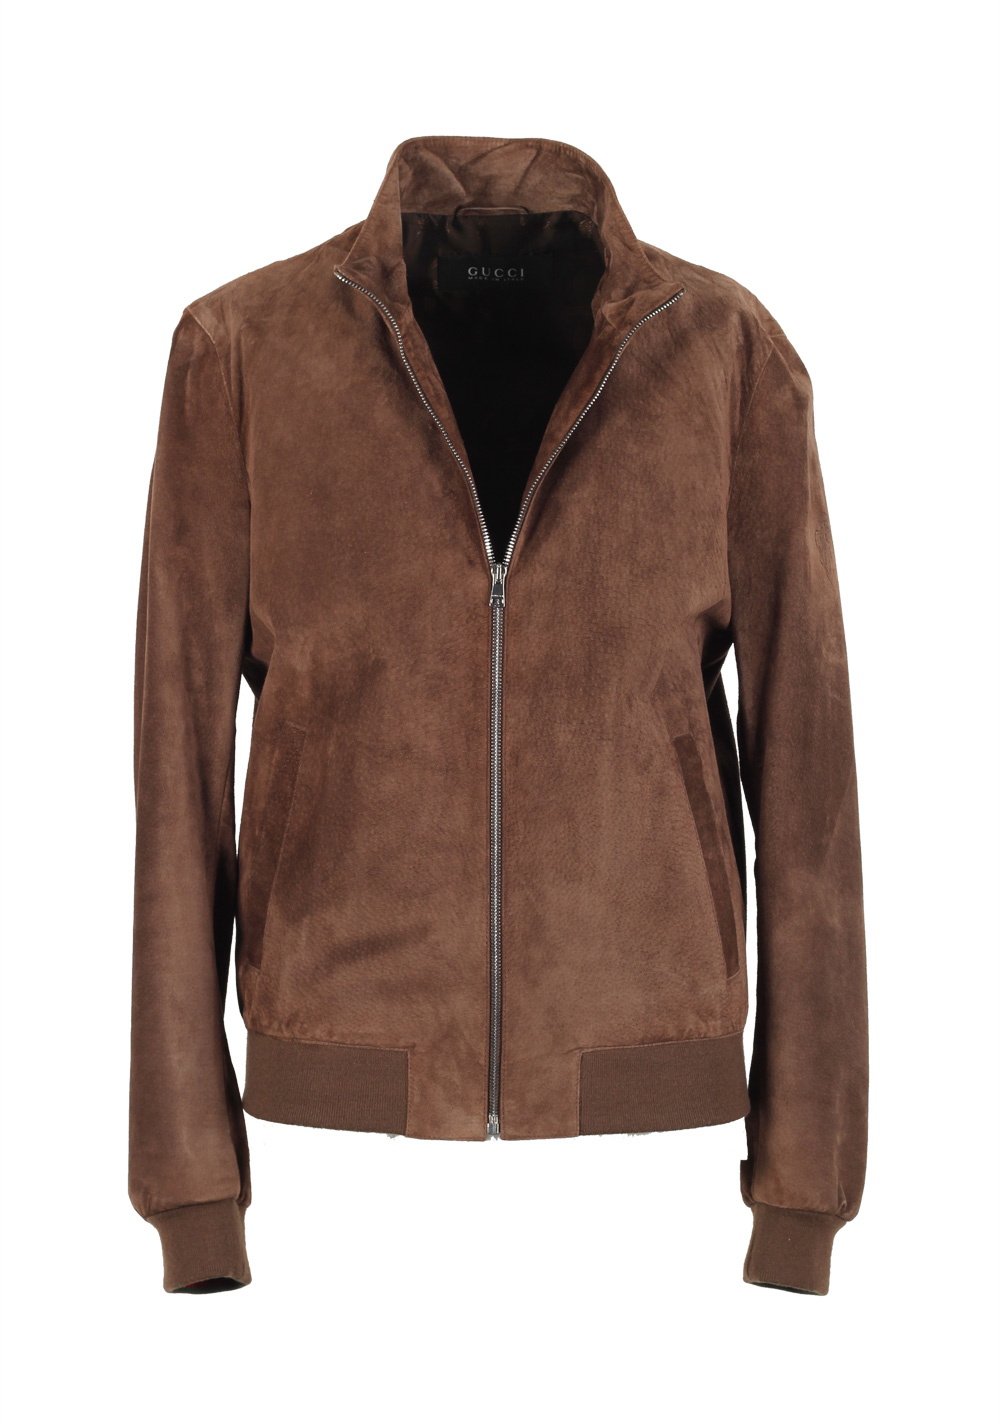 Gucci Brown Leather Bomber Jacket Coat Size 50 / 40R U.S. | Costume Limité